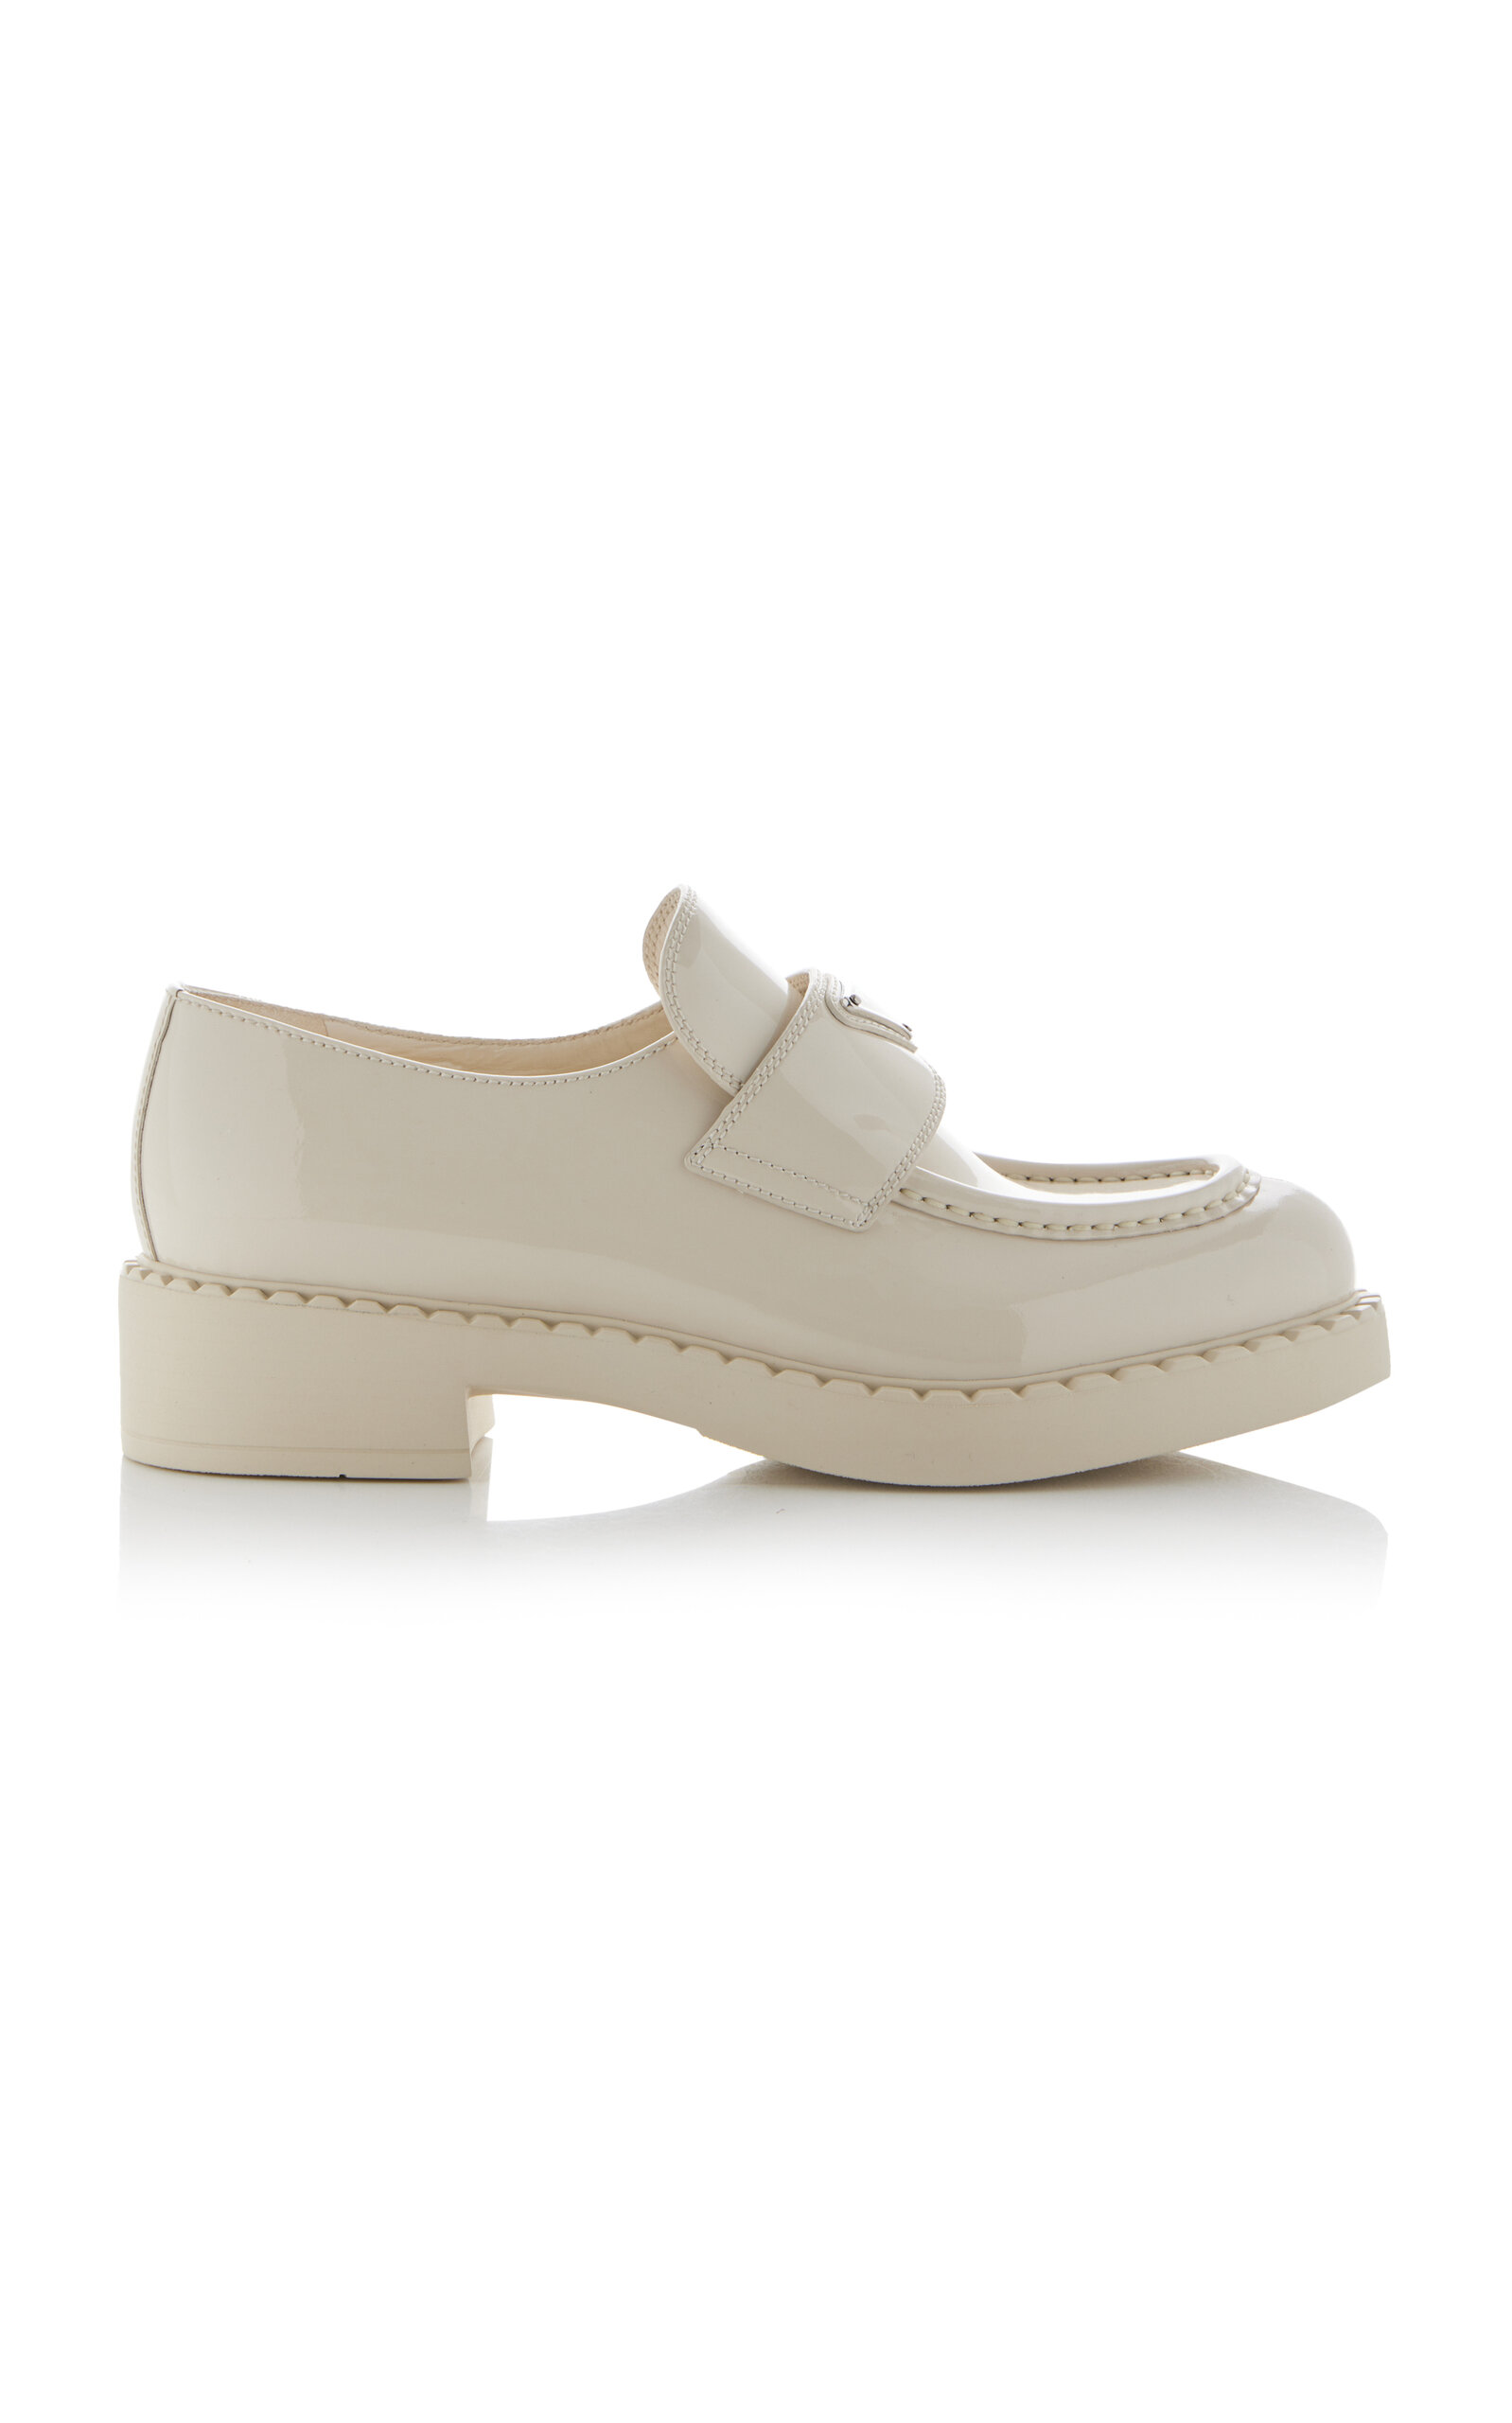 Prada - Patent Leather Loafers - Ivory - IT 39.5 - Moda Operandi